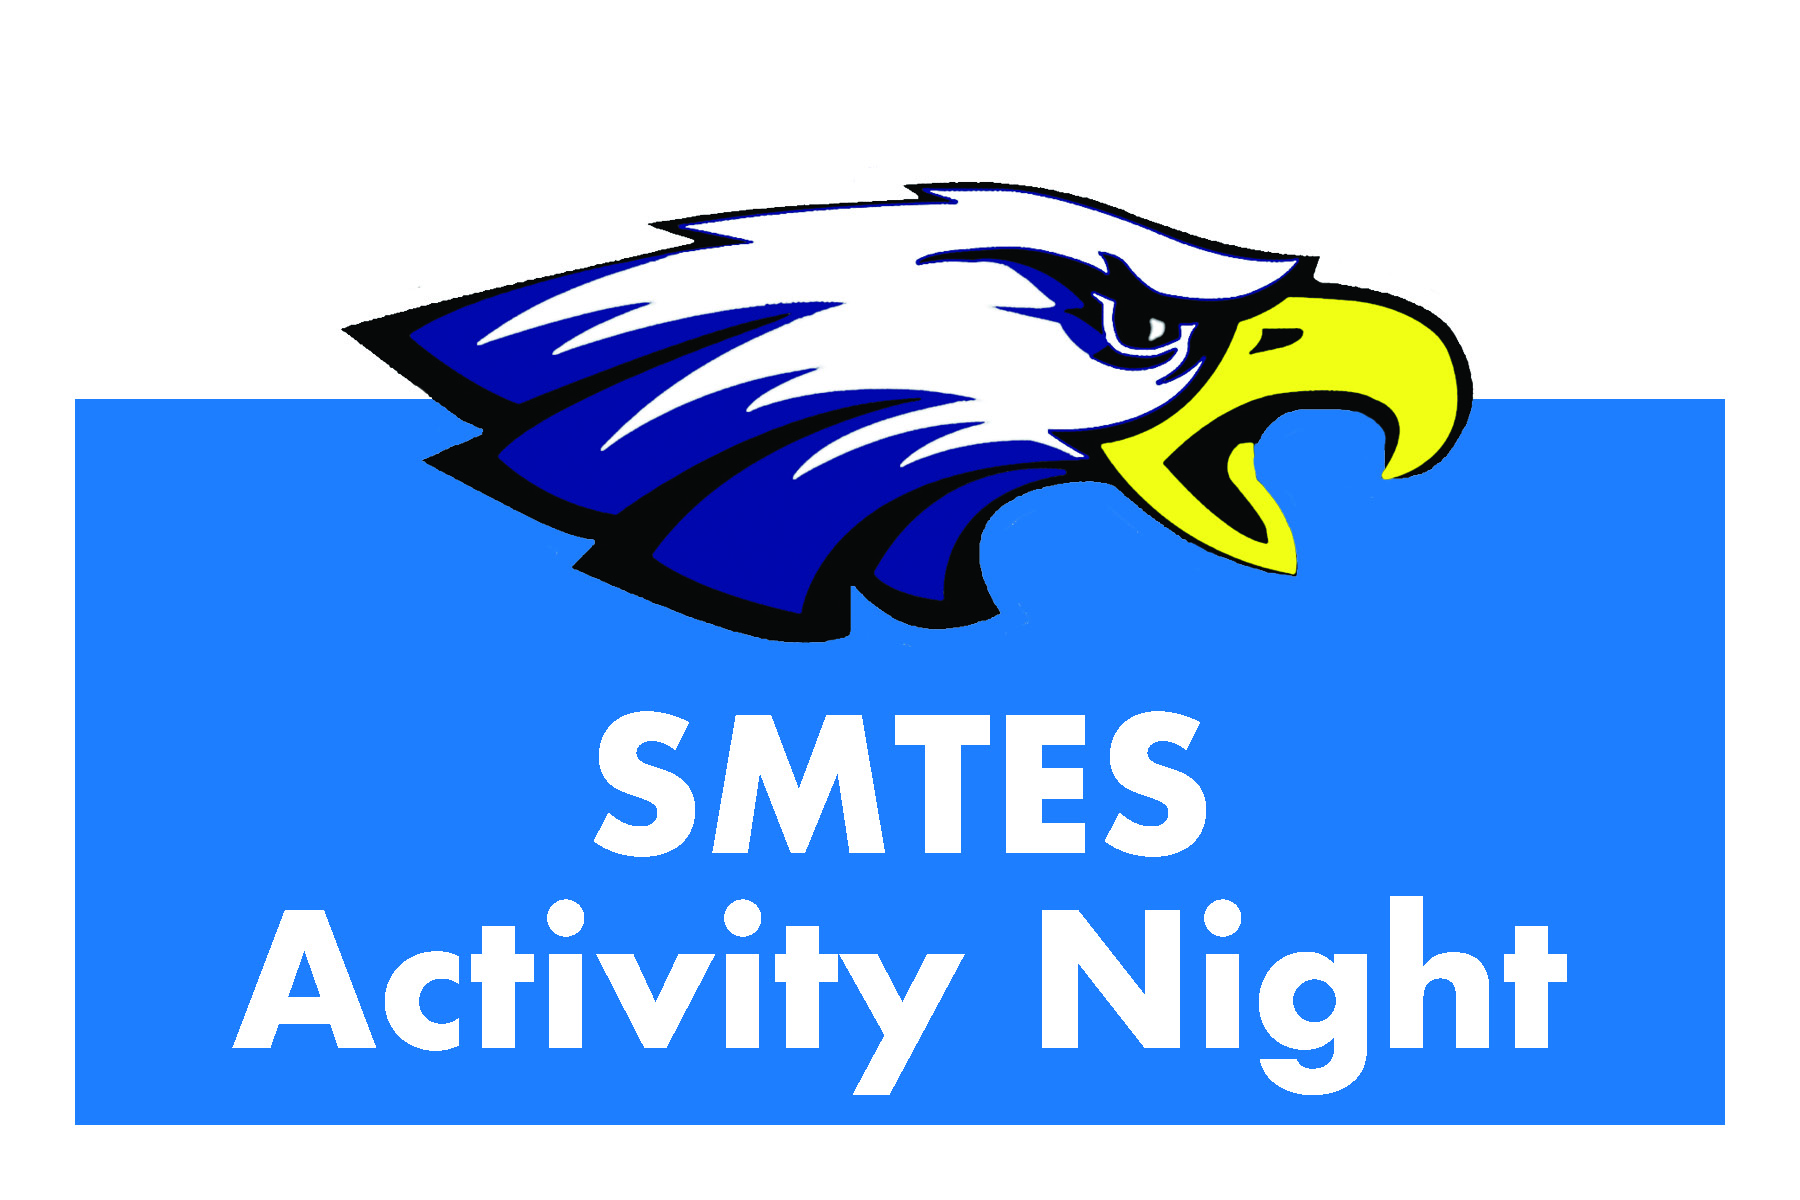 SMTES Activity Night June 6